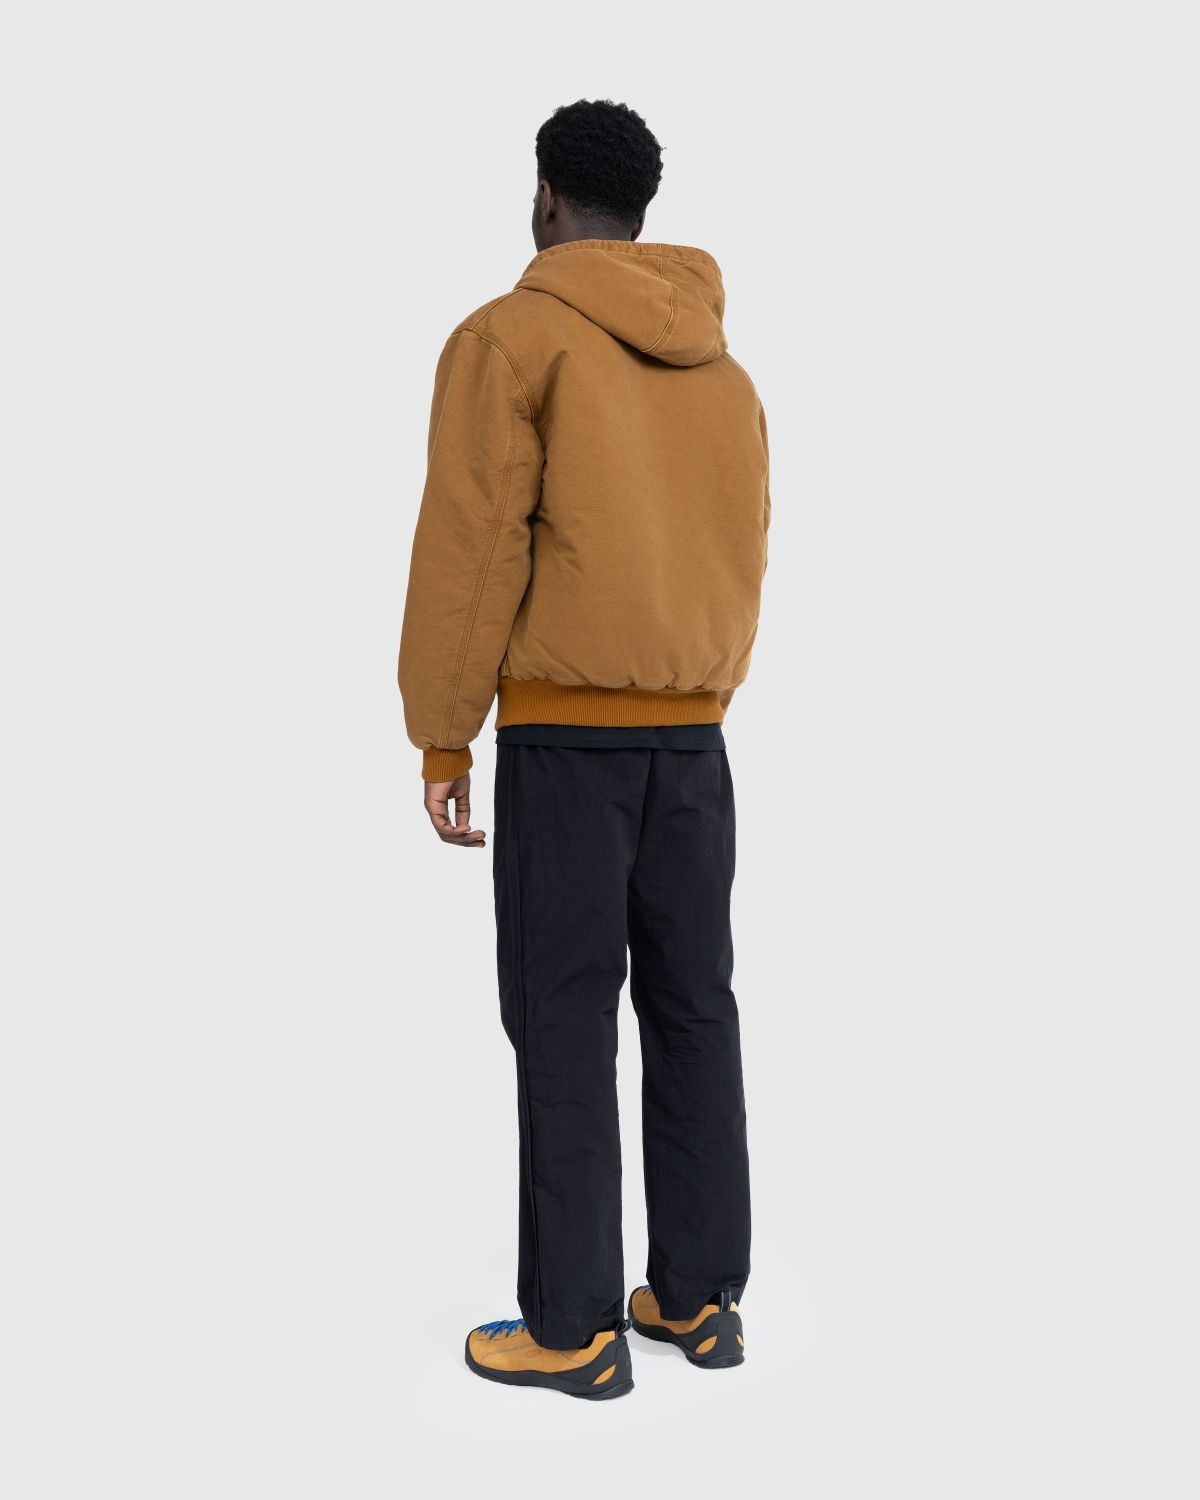 Carhartt WIP – OG Active Jacket Deep Brown - Outerwear - Brown - Image 4